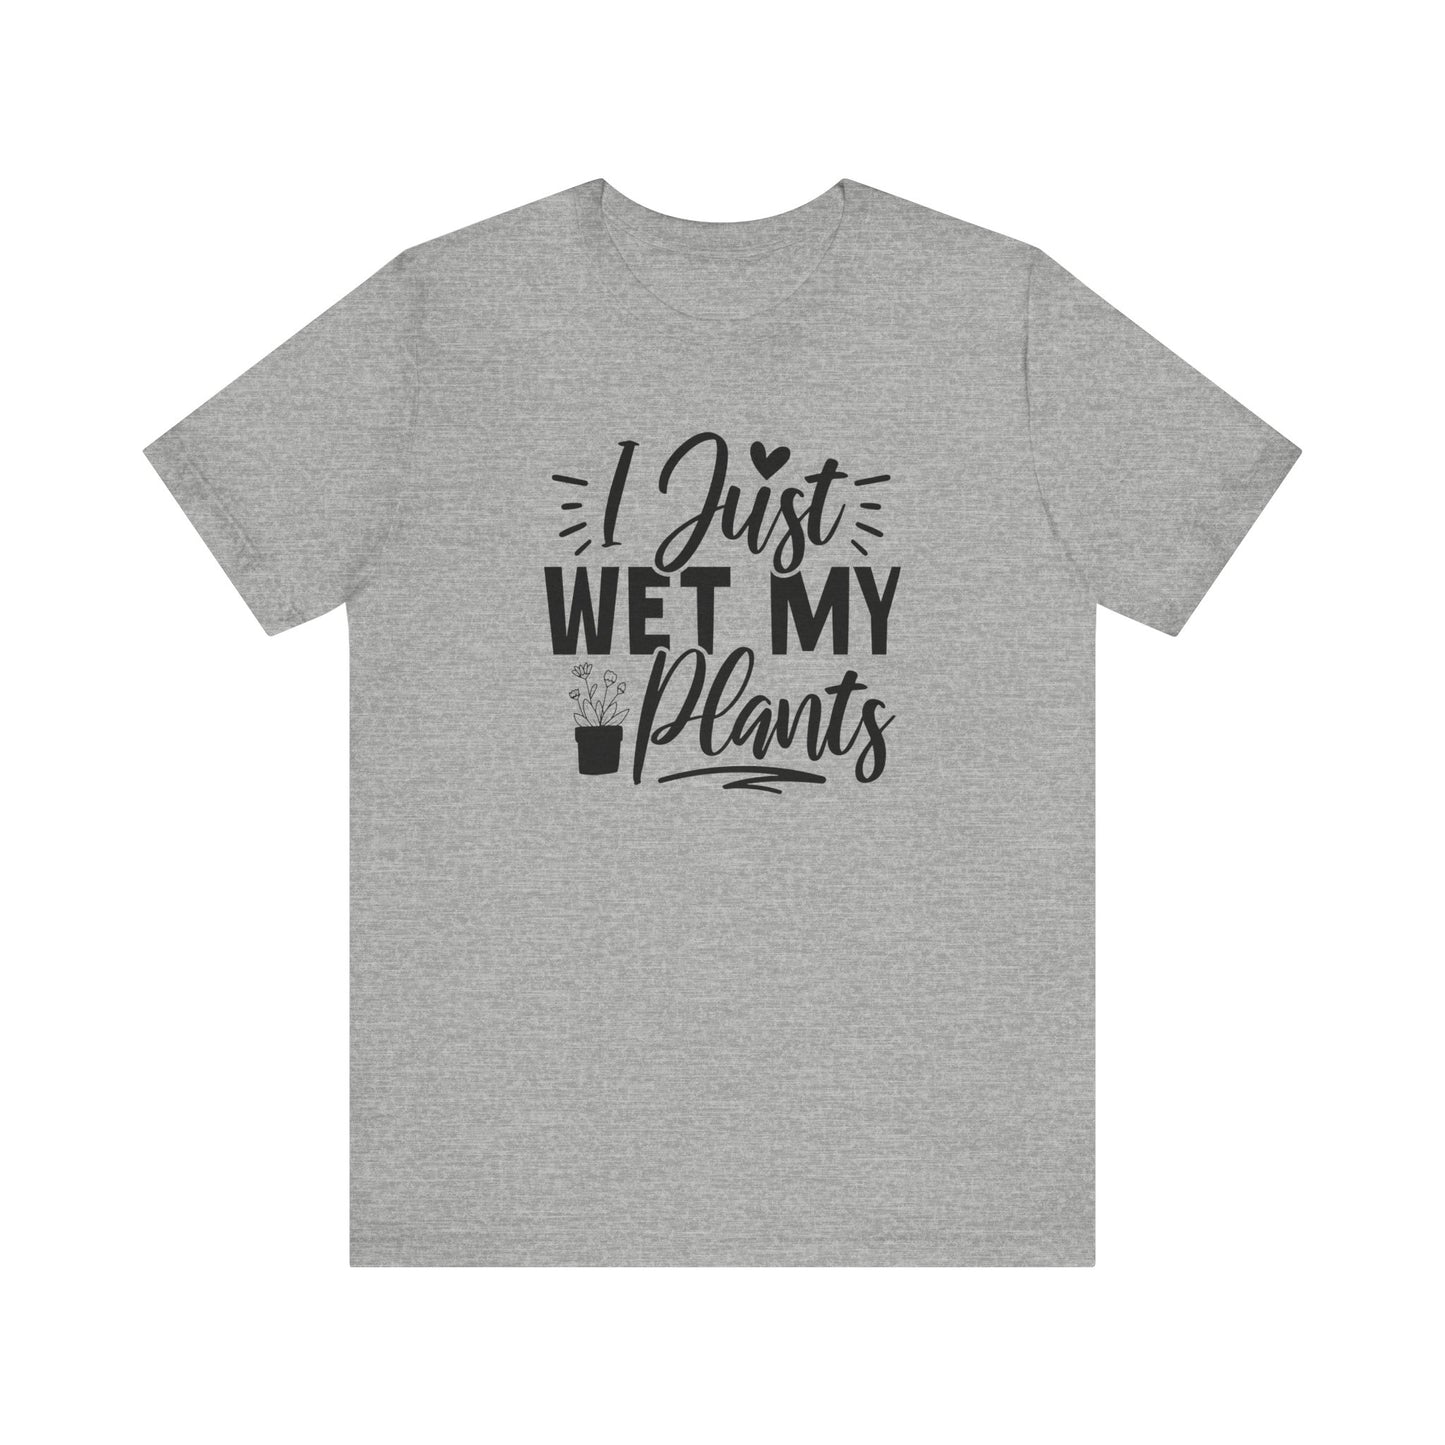 Funny Plant T-Shirt For Gardening T Shirt For Flower Lover TShirt For Horticulturist Gift